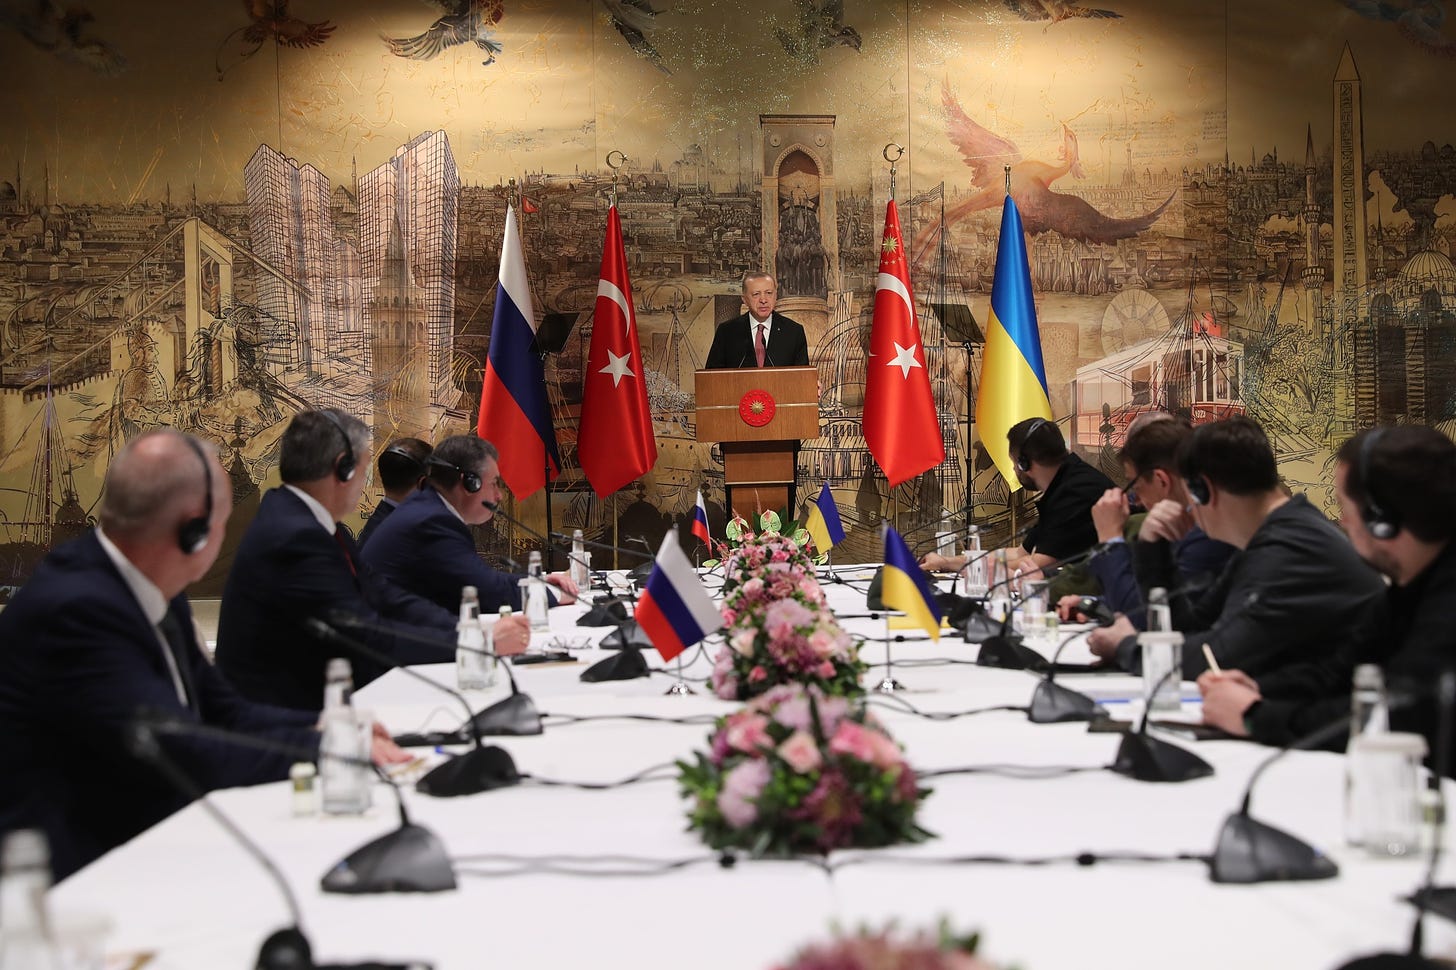 Recep Tayyip Erdogan speaks ahead of peace talks between Russian and Ukrainian delegations in Istanbul on March 29.